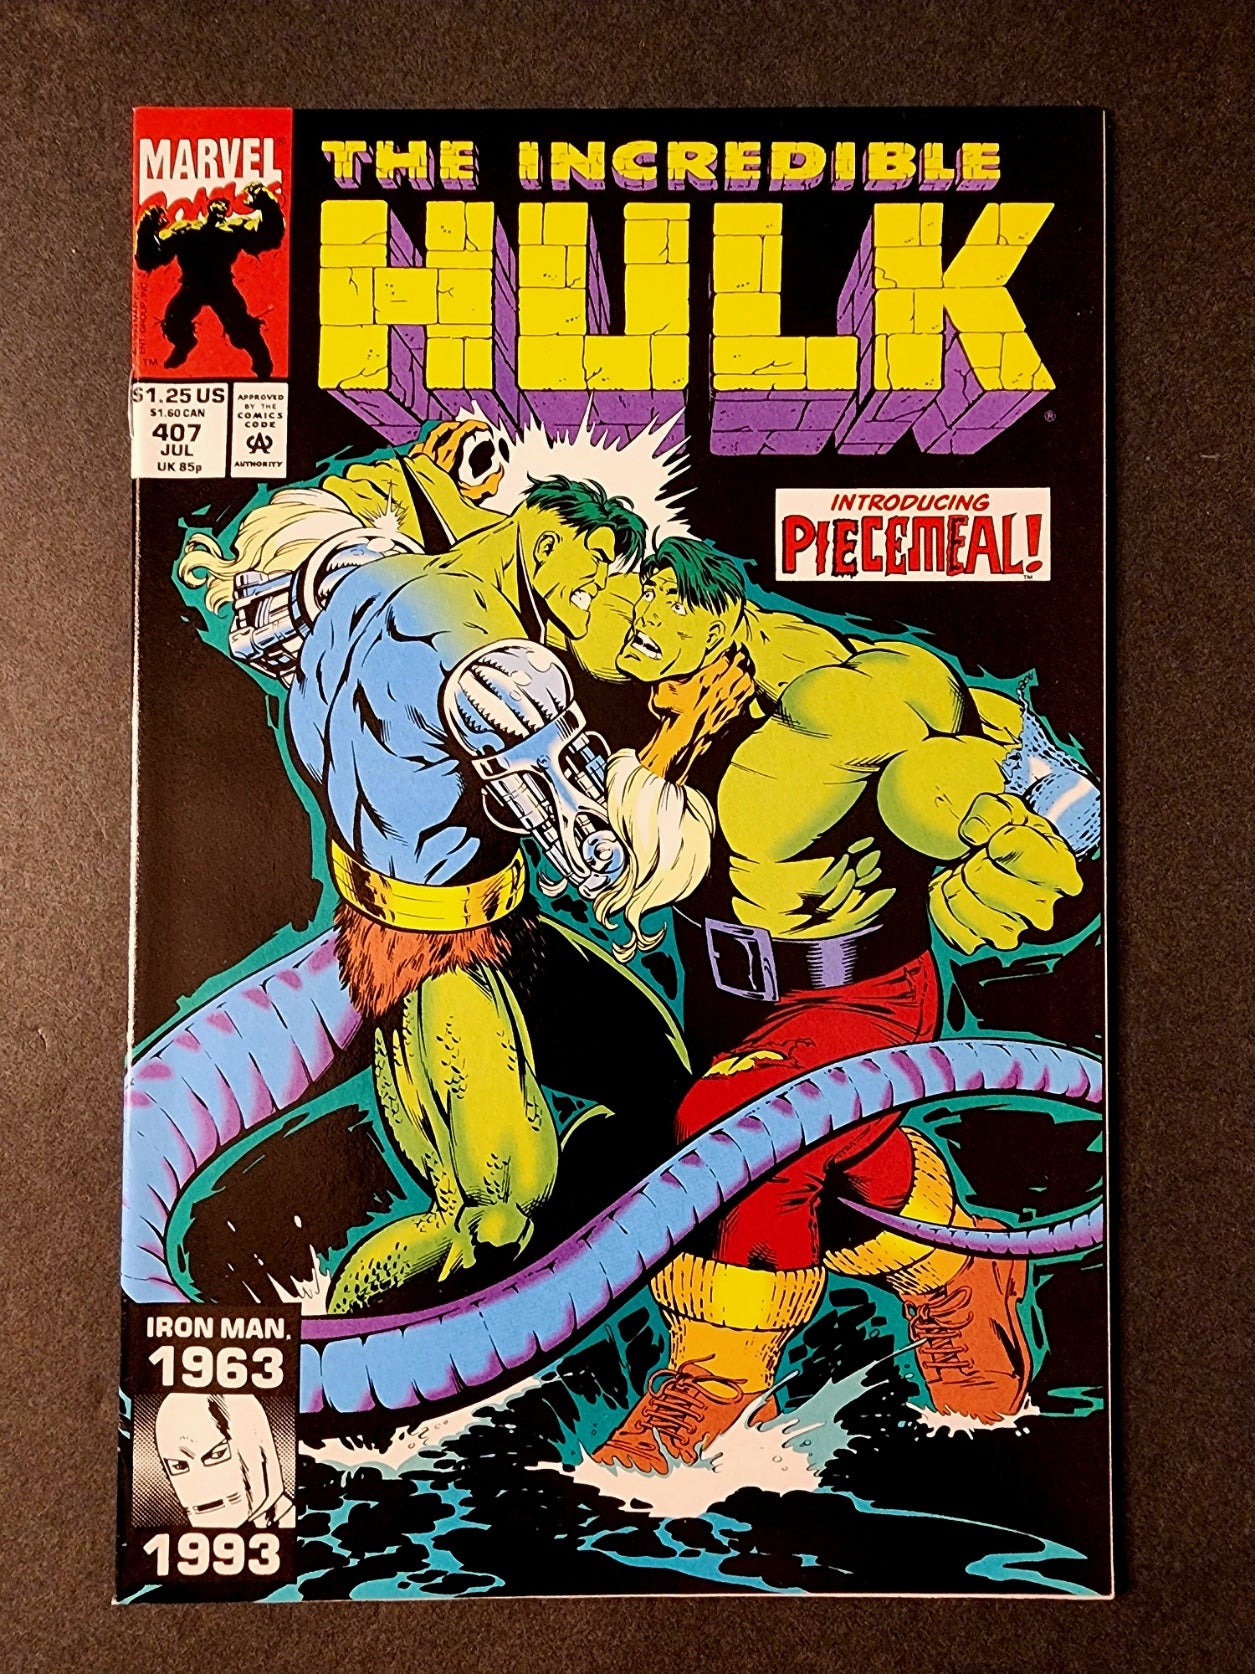 The Incredible Hulk #407 (VF)